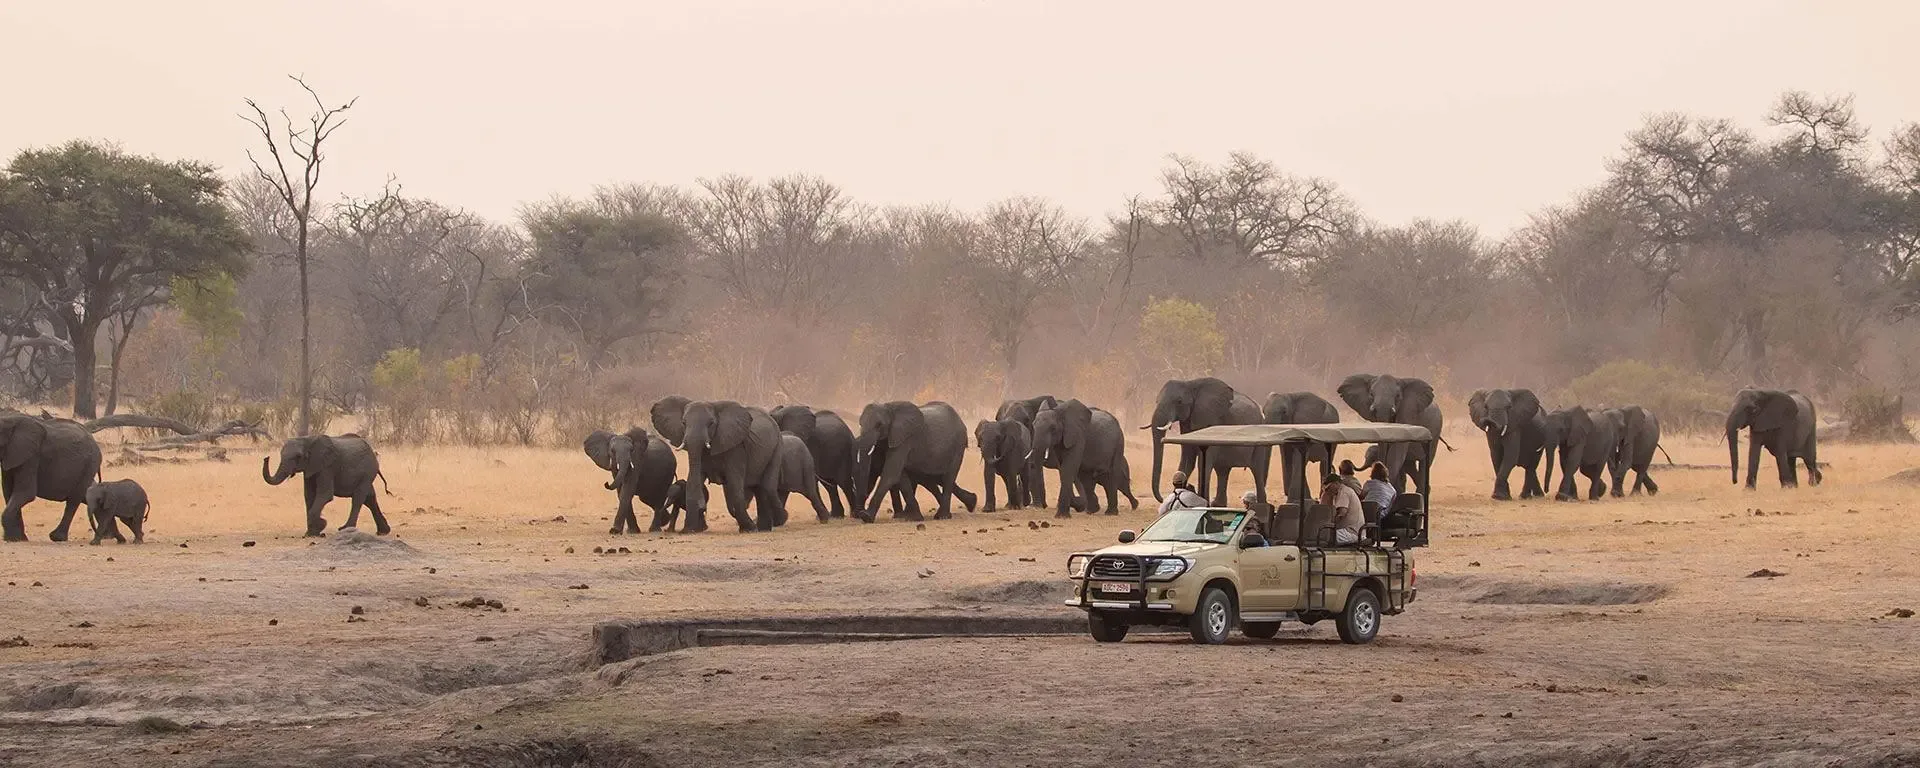 A herd of elephants cross the savannah, a safari truck alongside them.